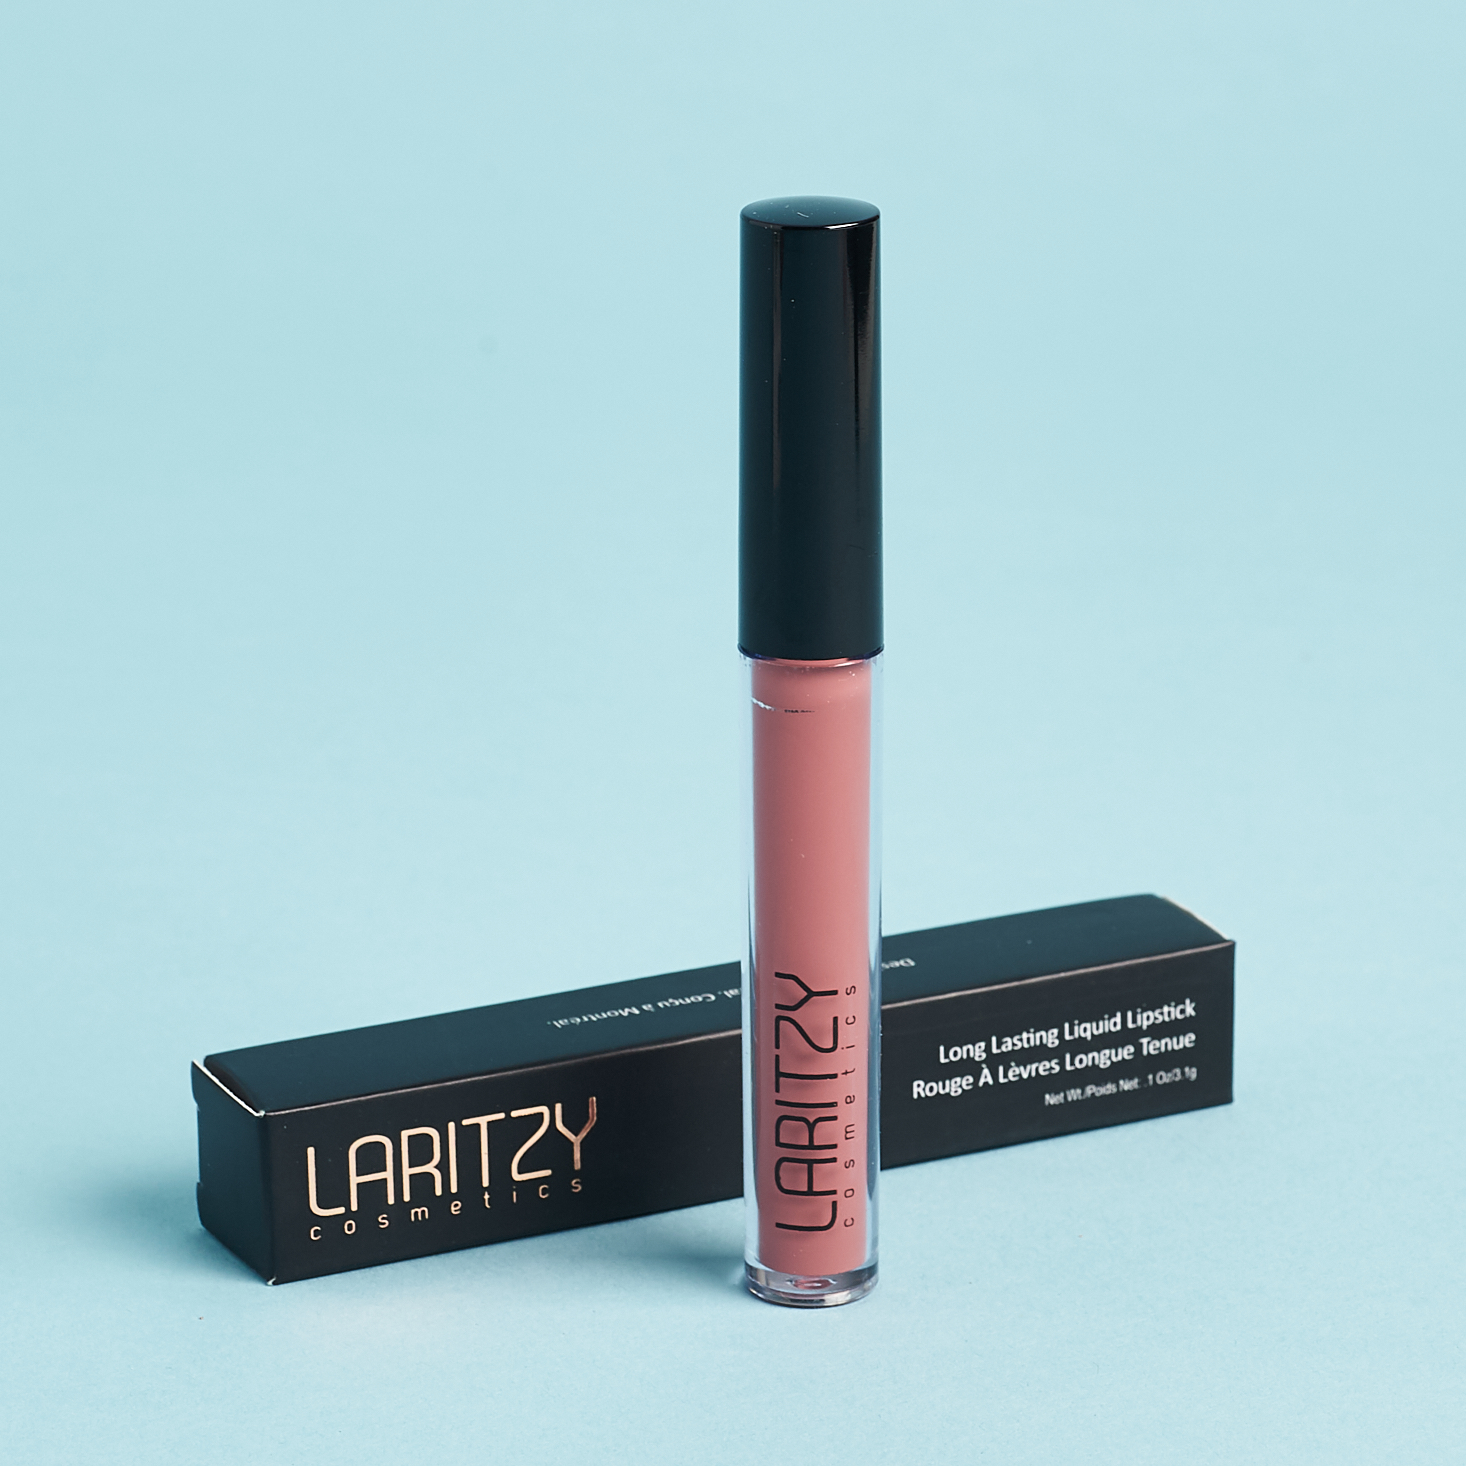 Laritzy Long Lasting Liquid Lipstick with box